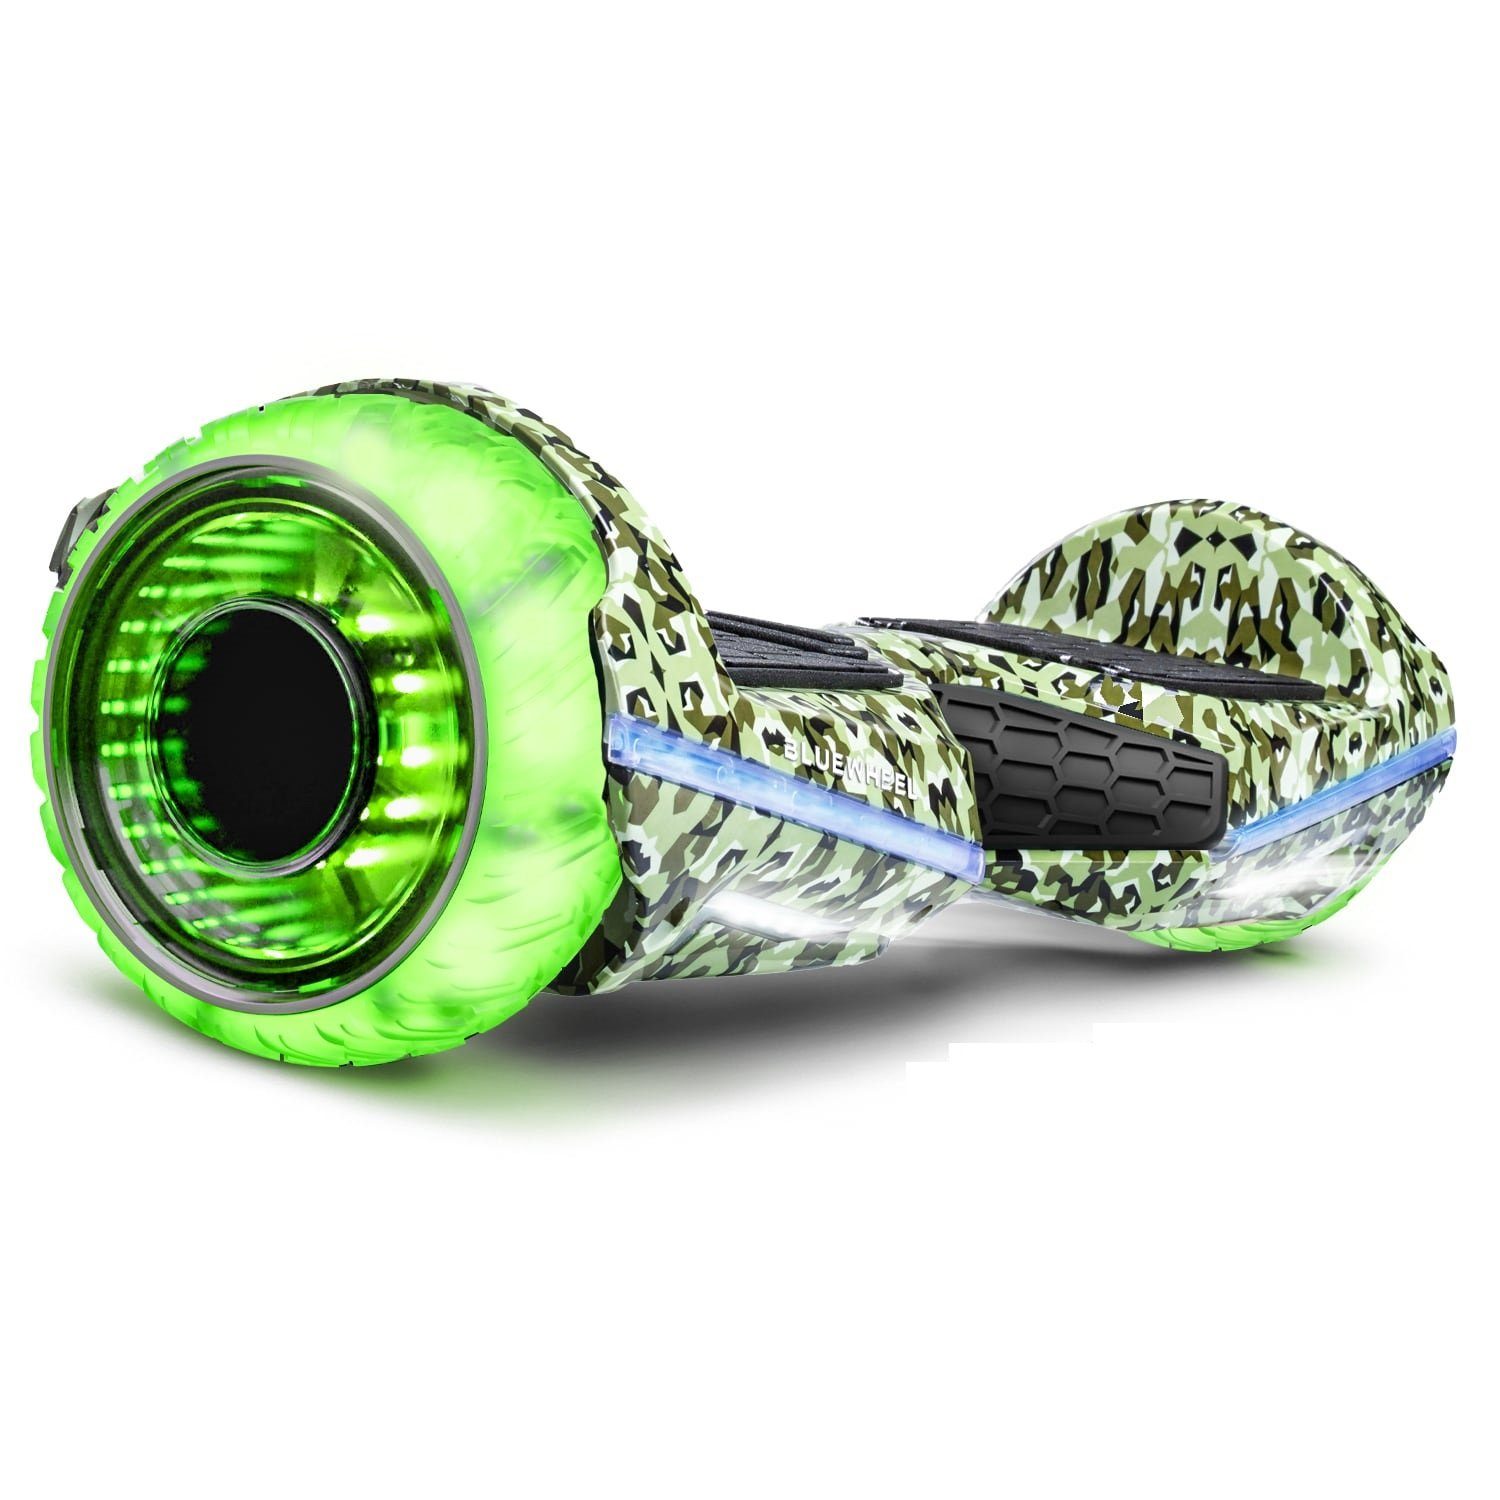 Bluewheel Electromobility Skateboard HX360, 6,5“ Premium Hoverboard Bluewheel HX360 Green Camouflage